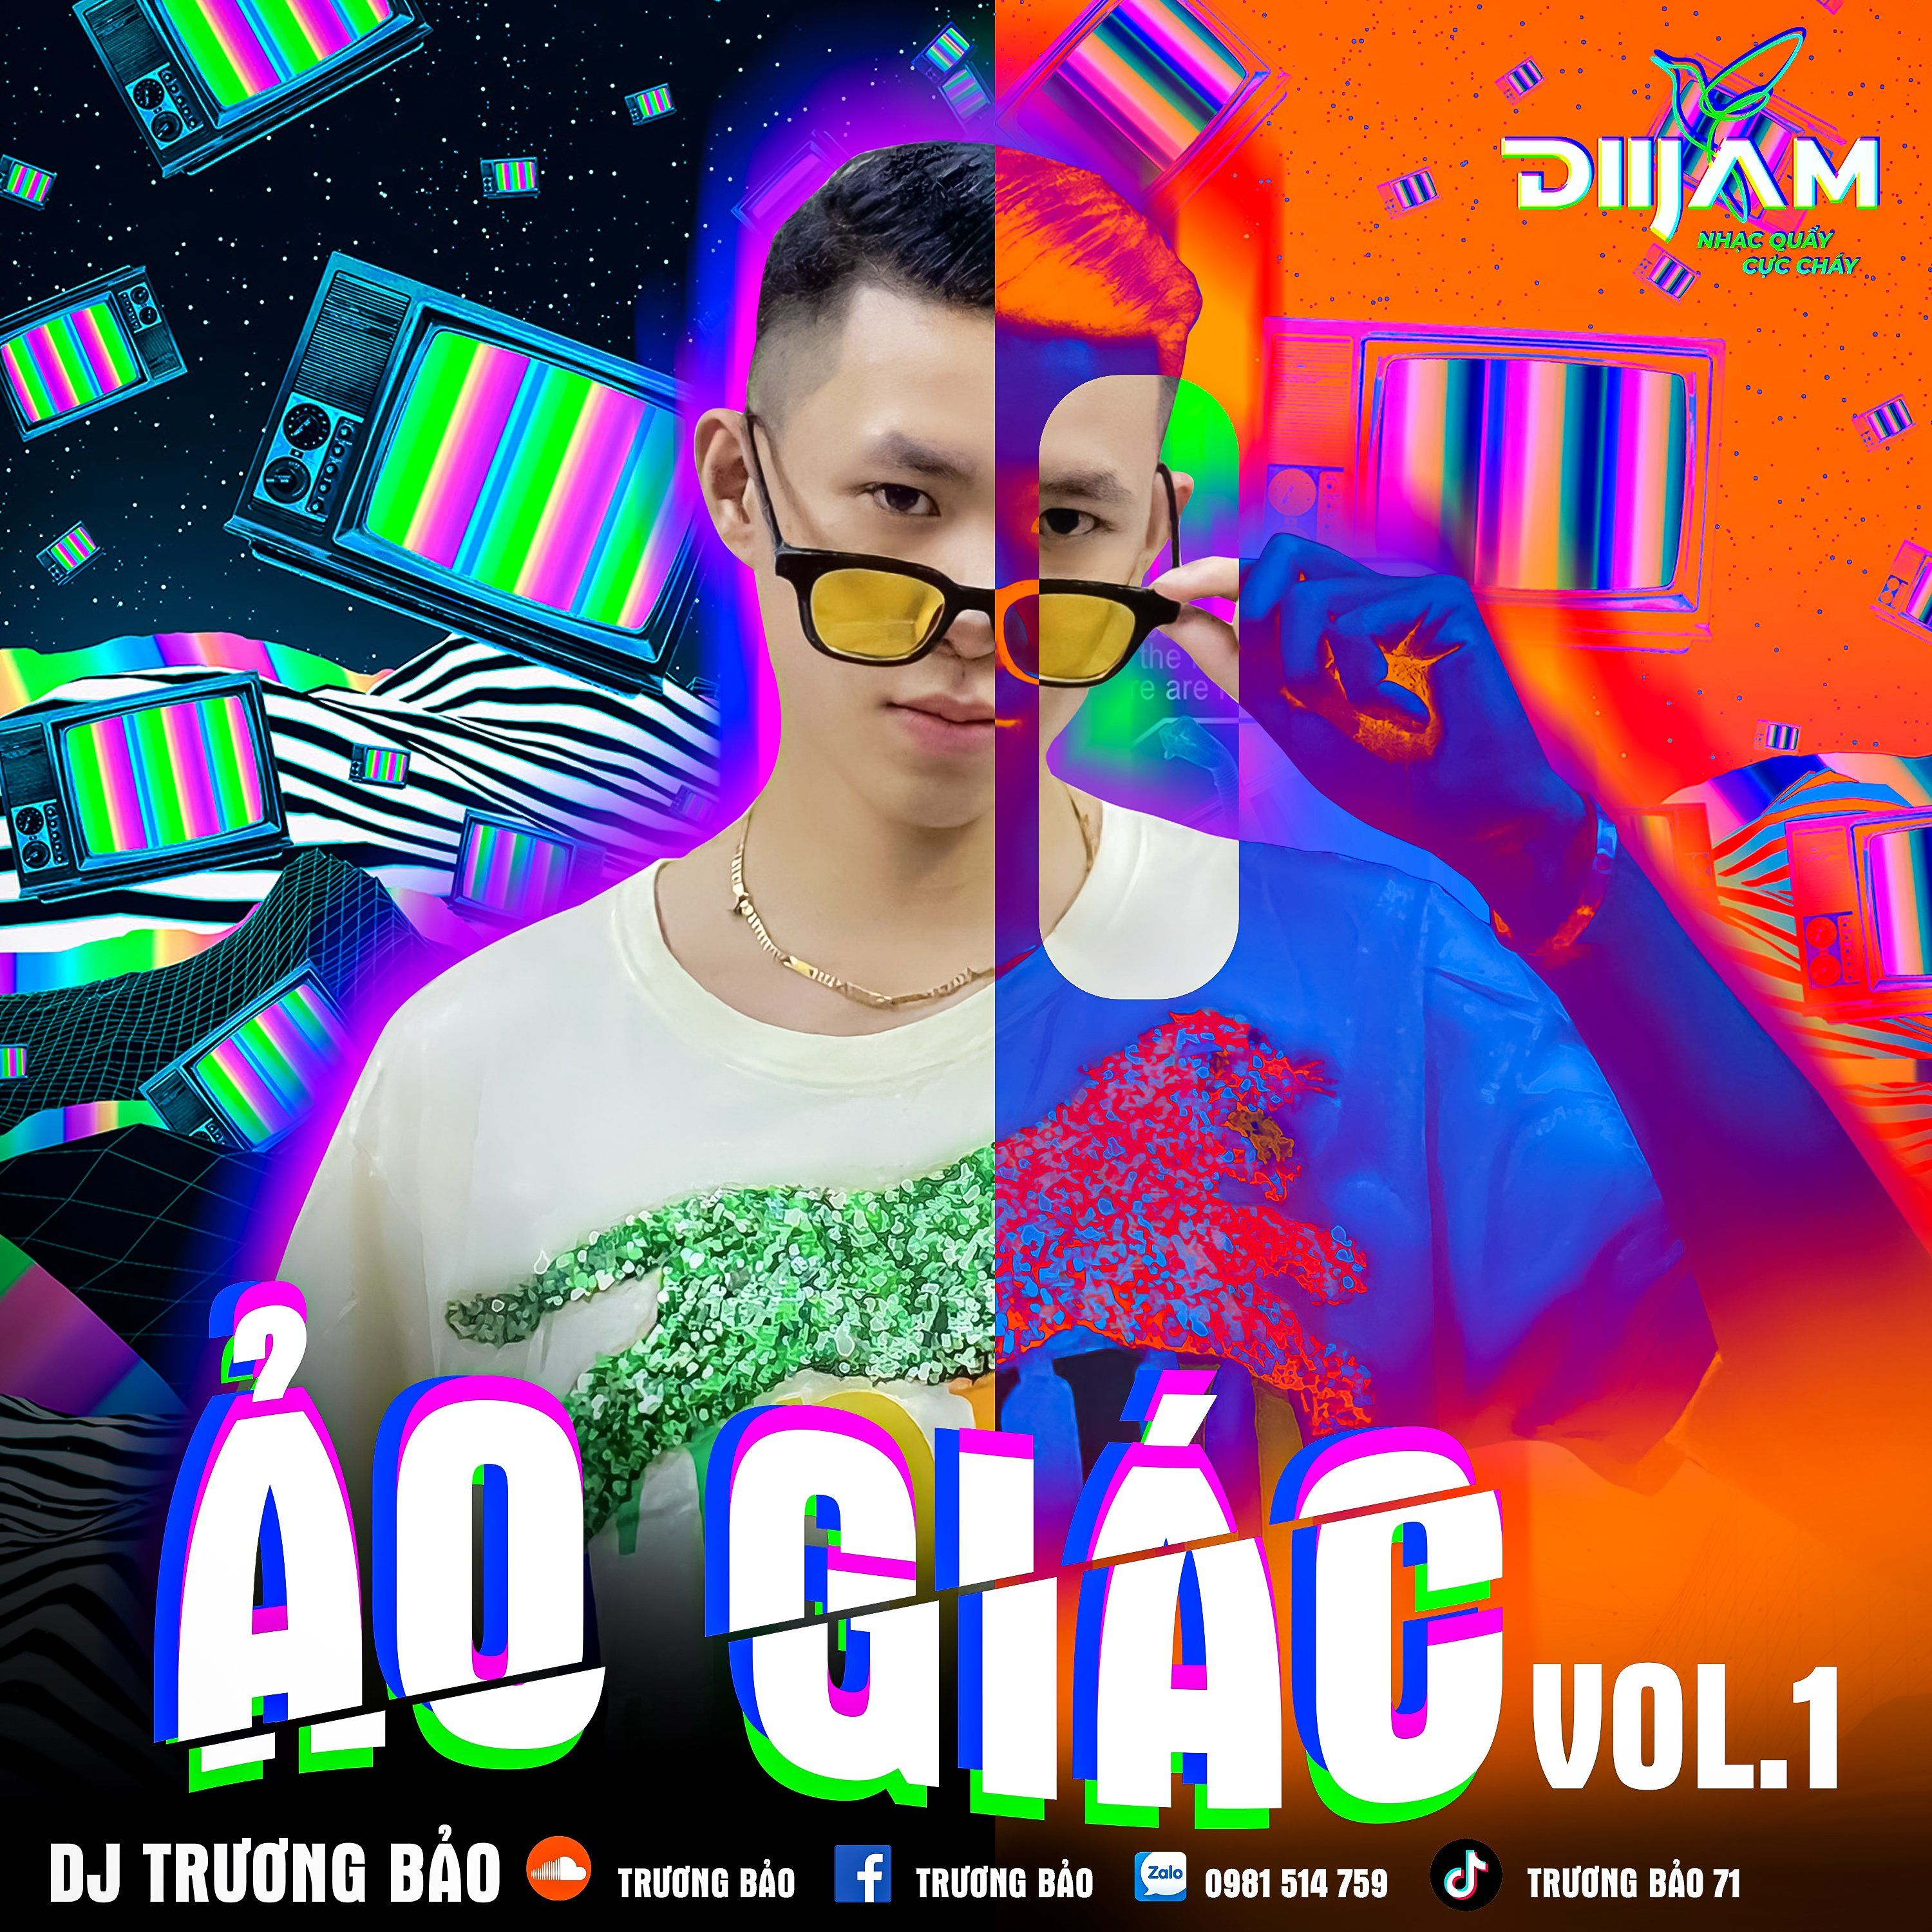 دانلود Ảo Giác Vol 1 - DJ Trương Bảo (Nonstop Diijam)